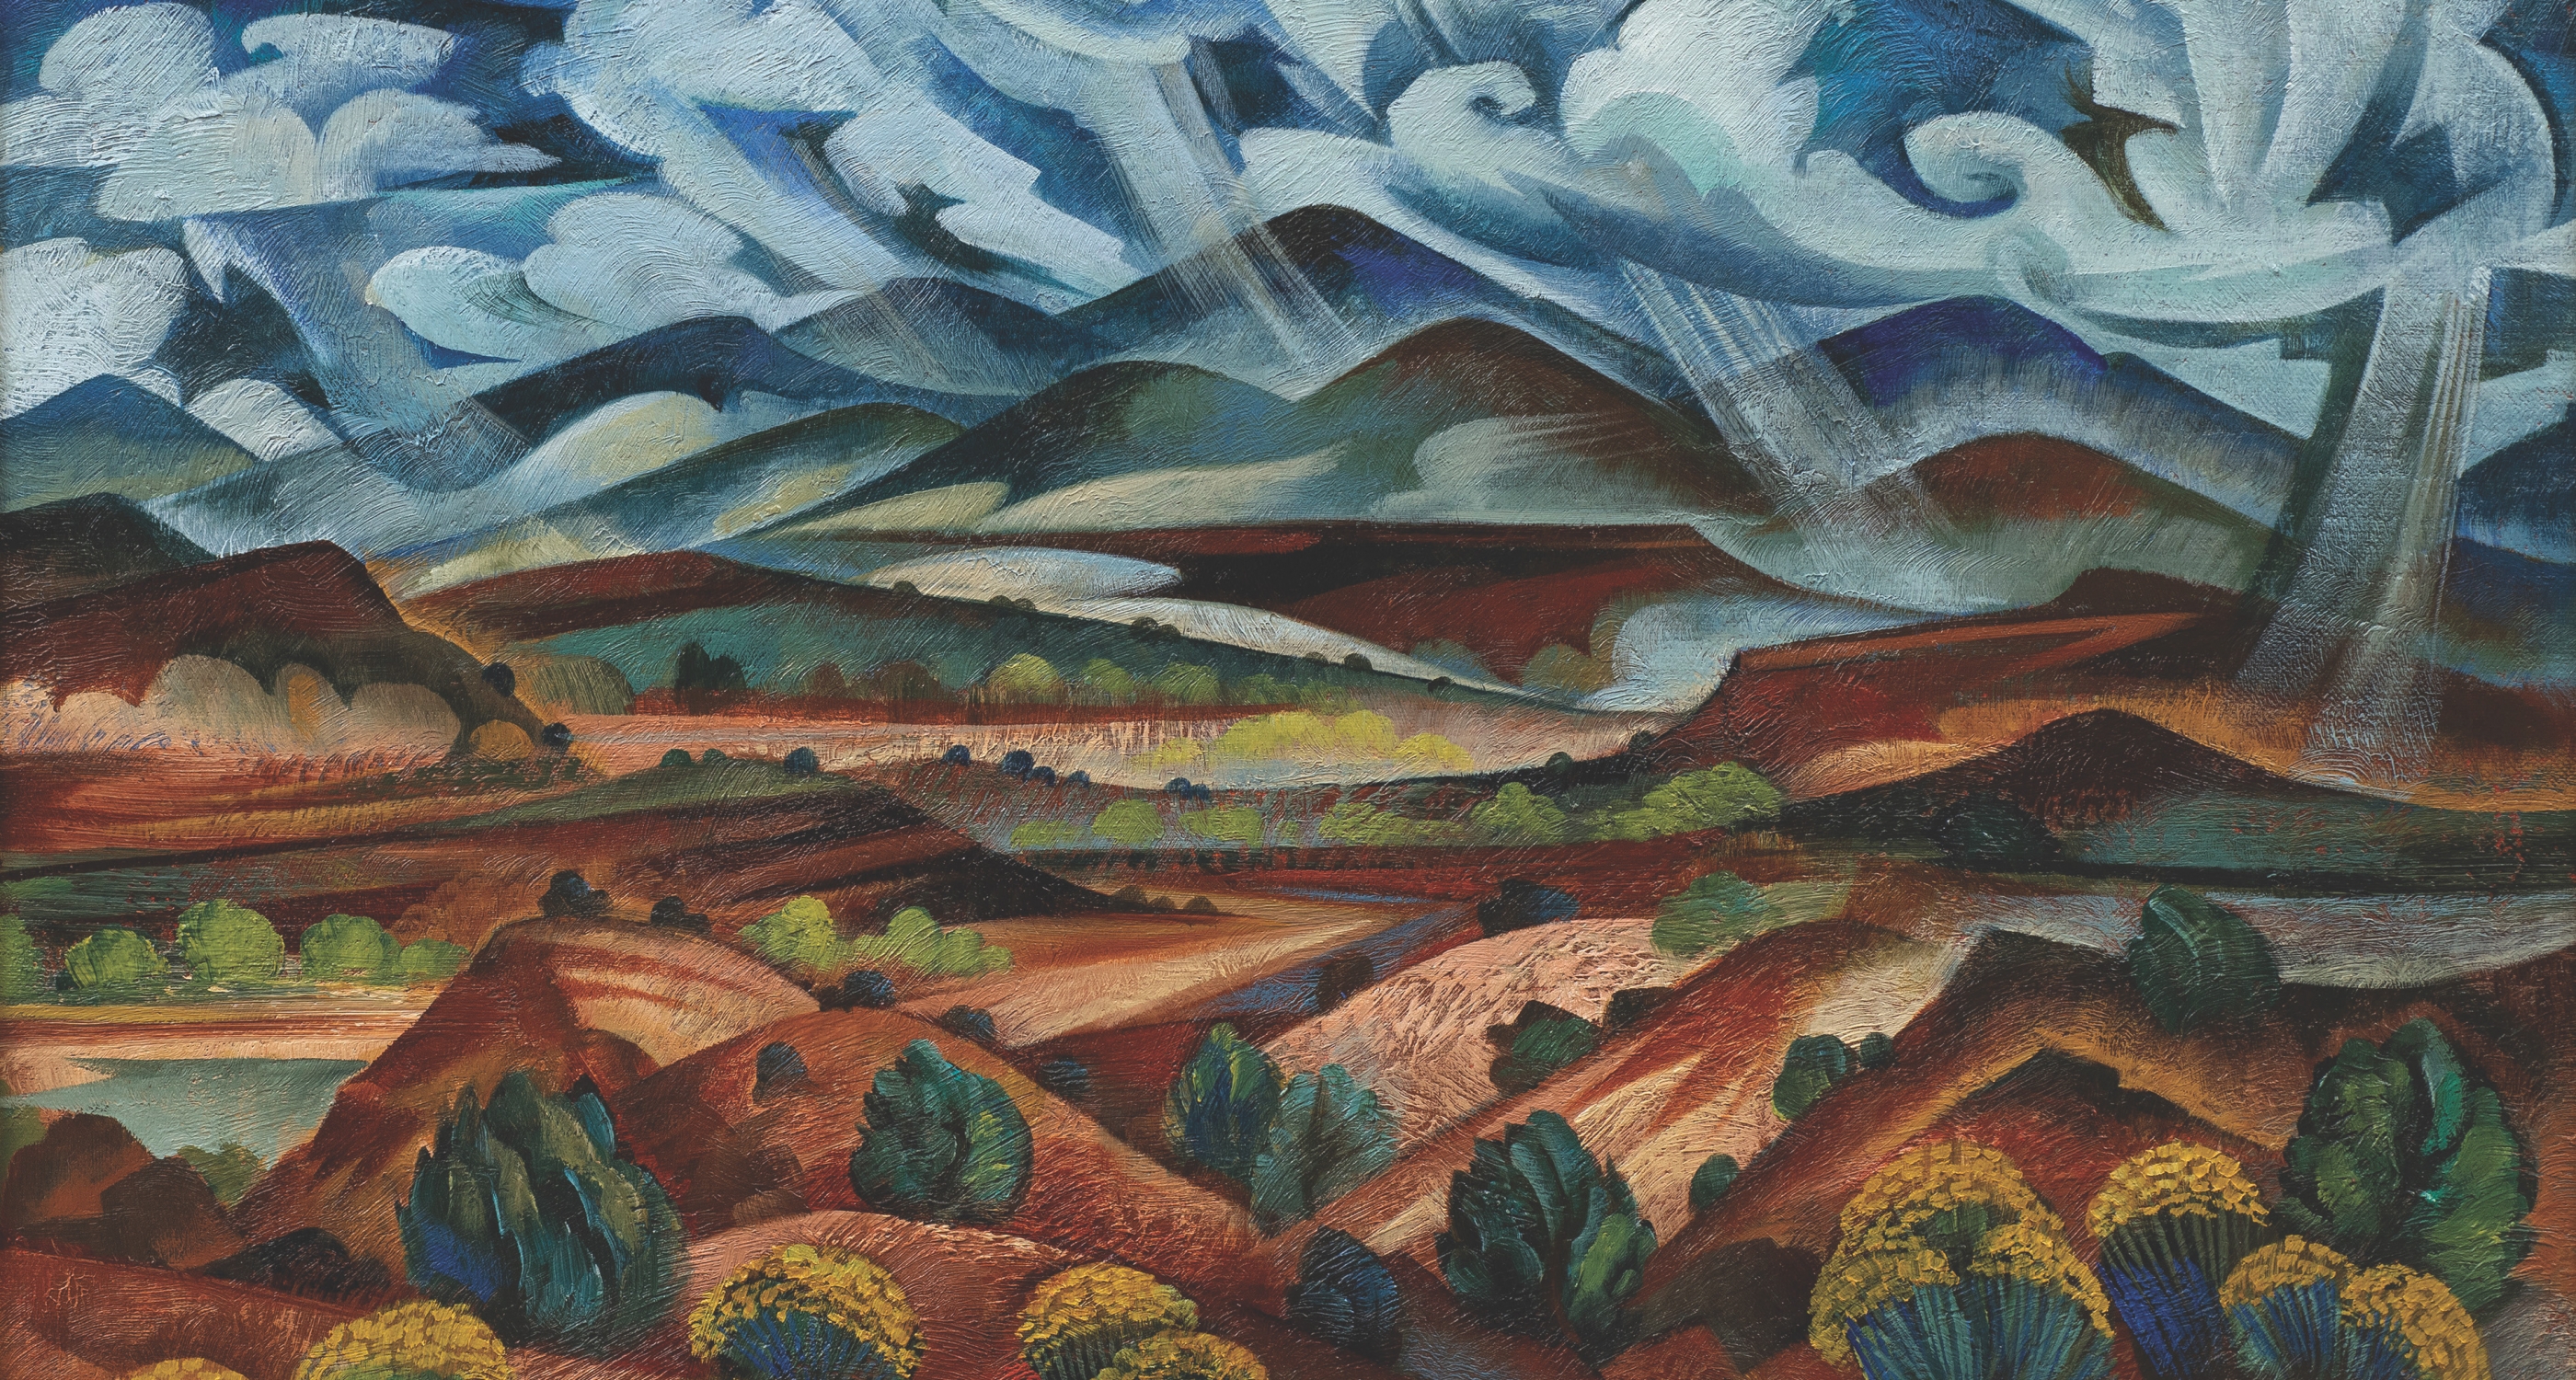 22. Tony Abeyta (b.1965) "Autumnal Landscape," d.2020, oil on canvas, 22 x 29 inches